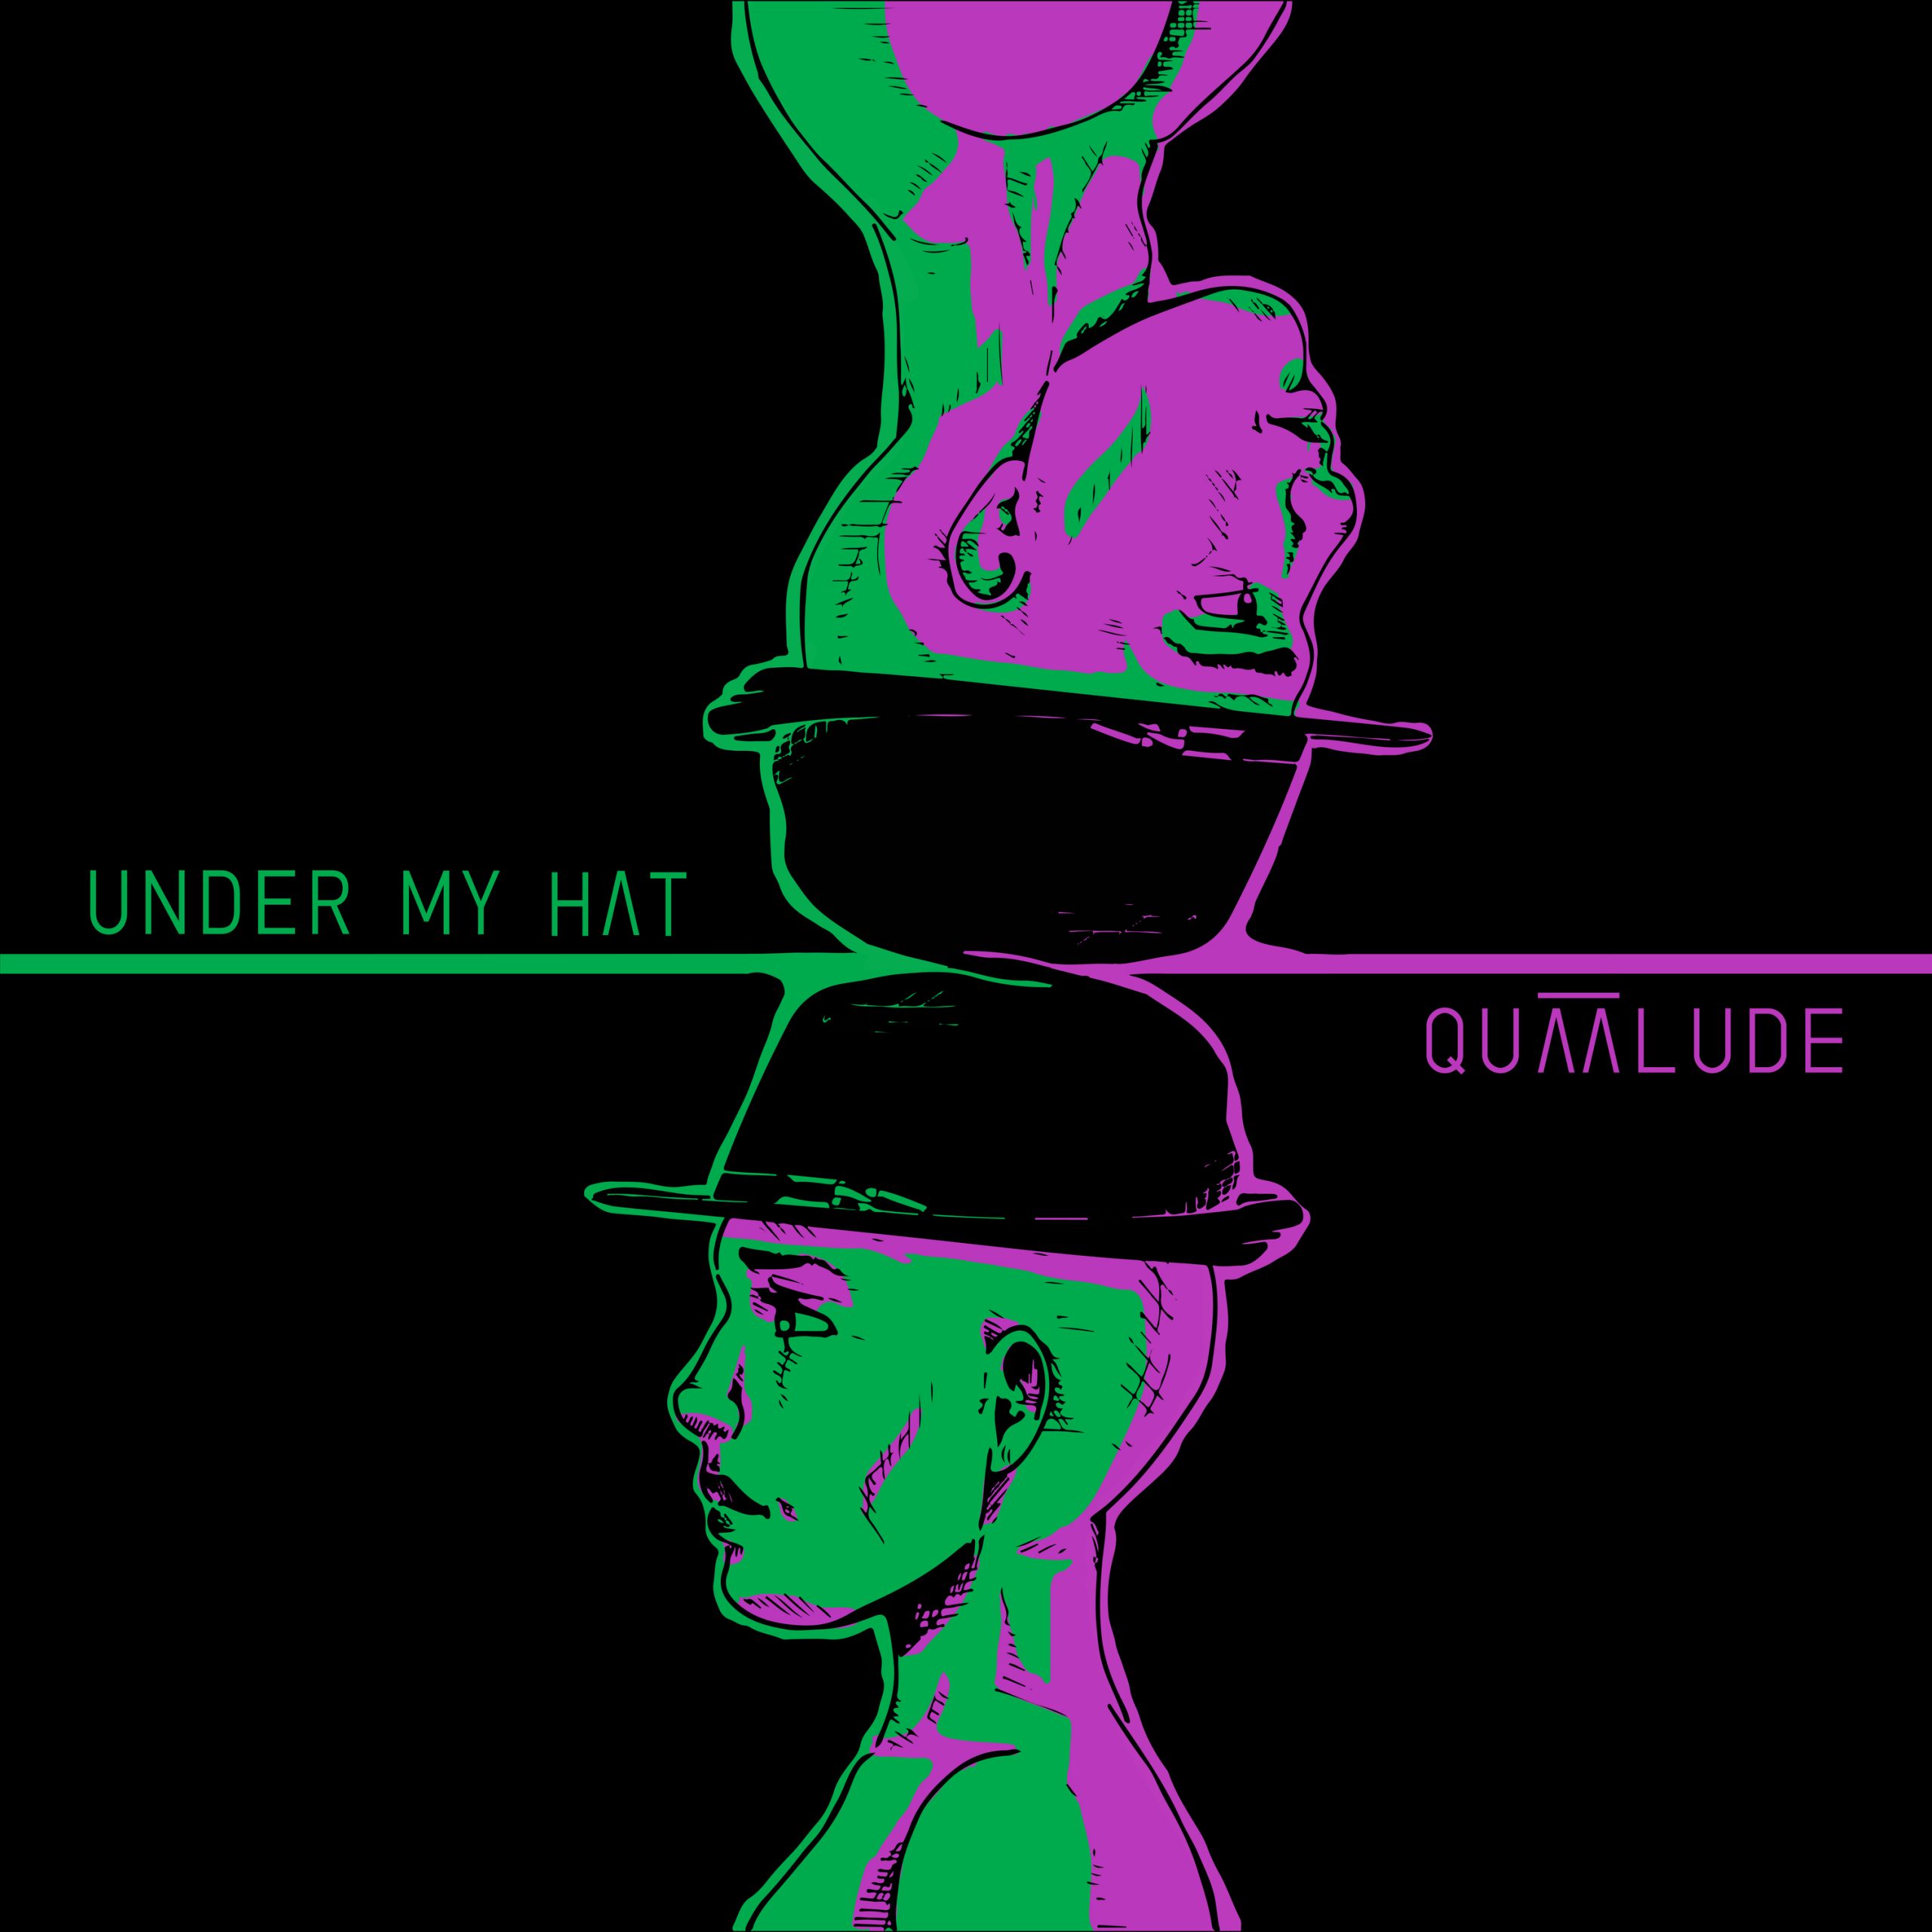 Quaalude – “Under My Hat”